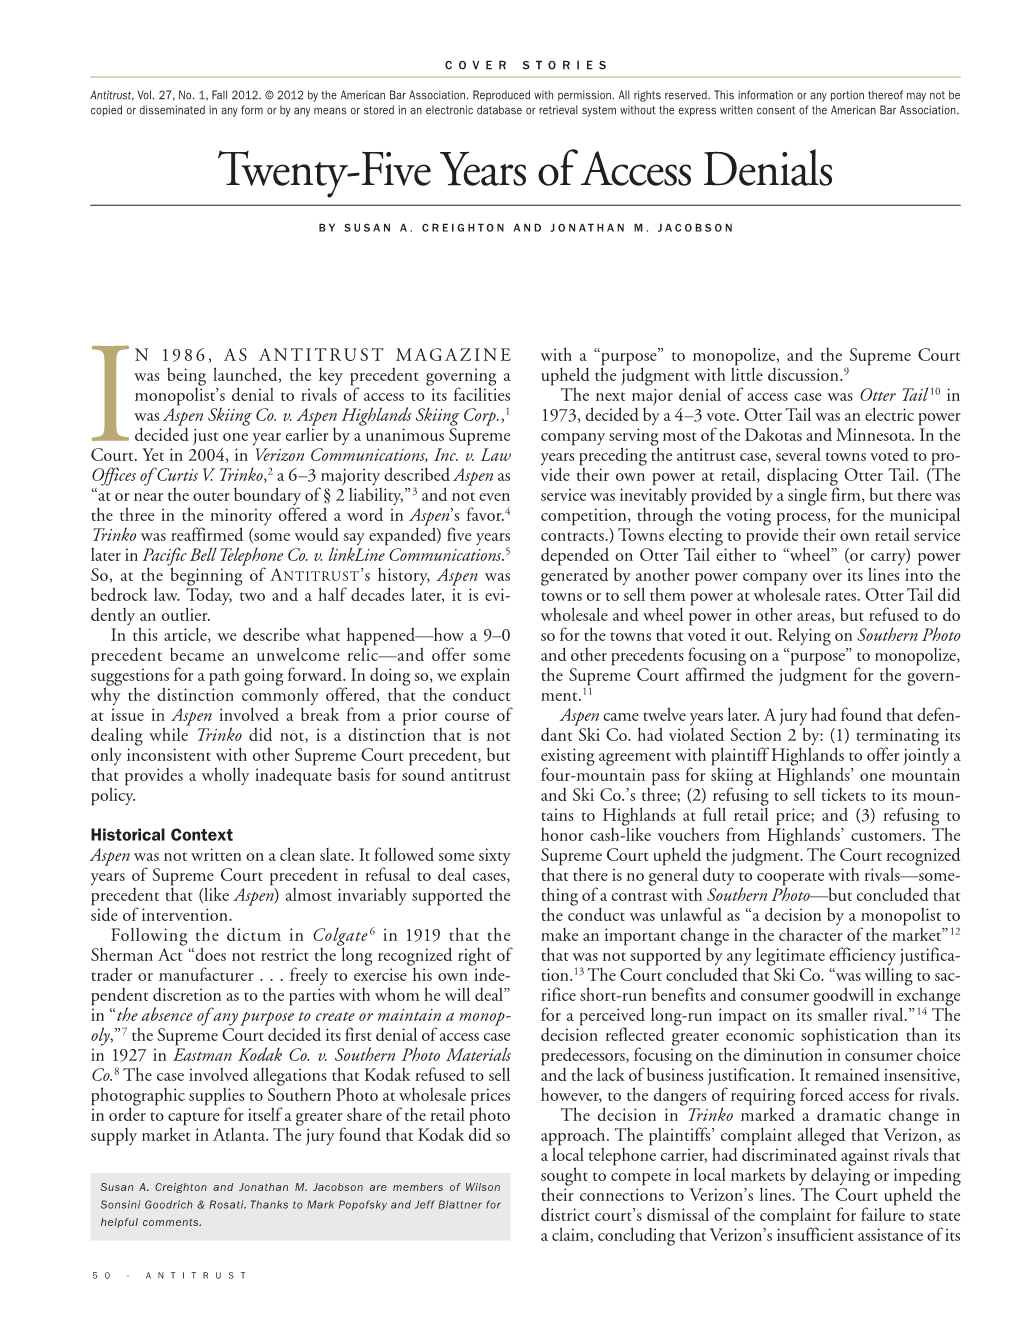 Twenty-Five Years of Access Denials